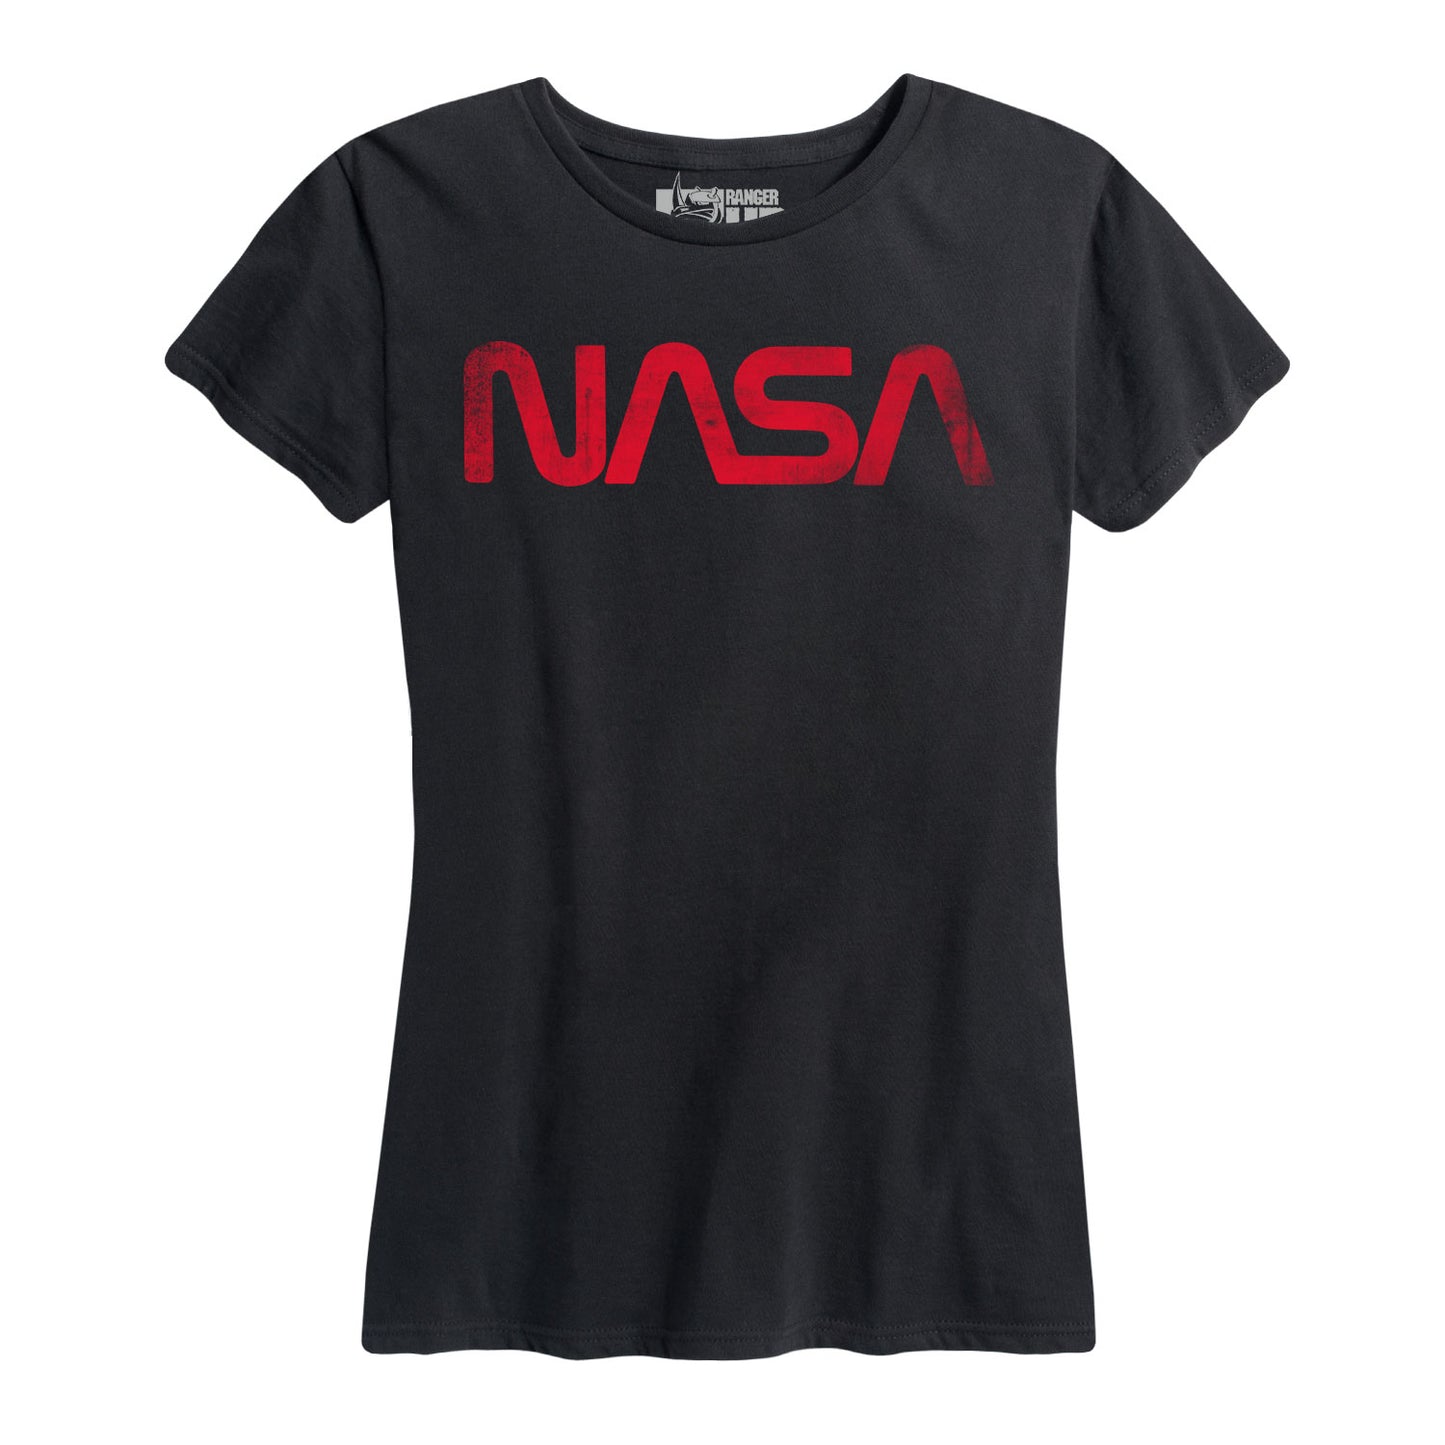 Women's NASA "Worm" Tee Black